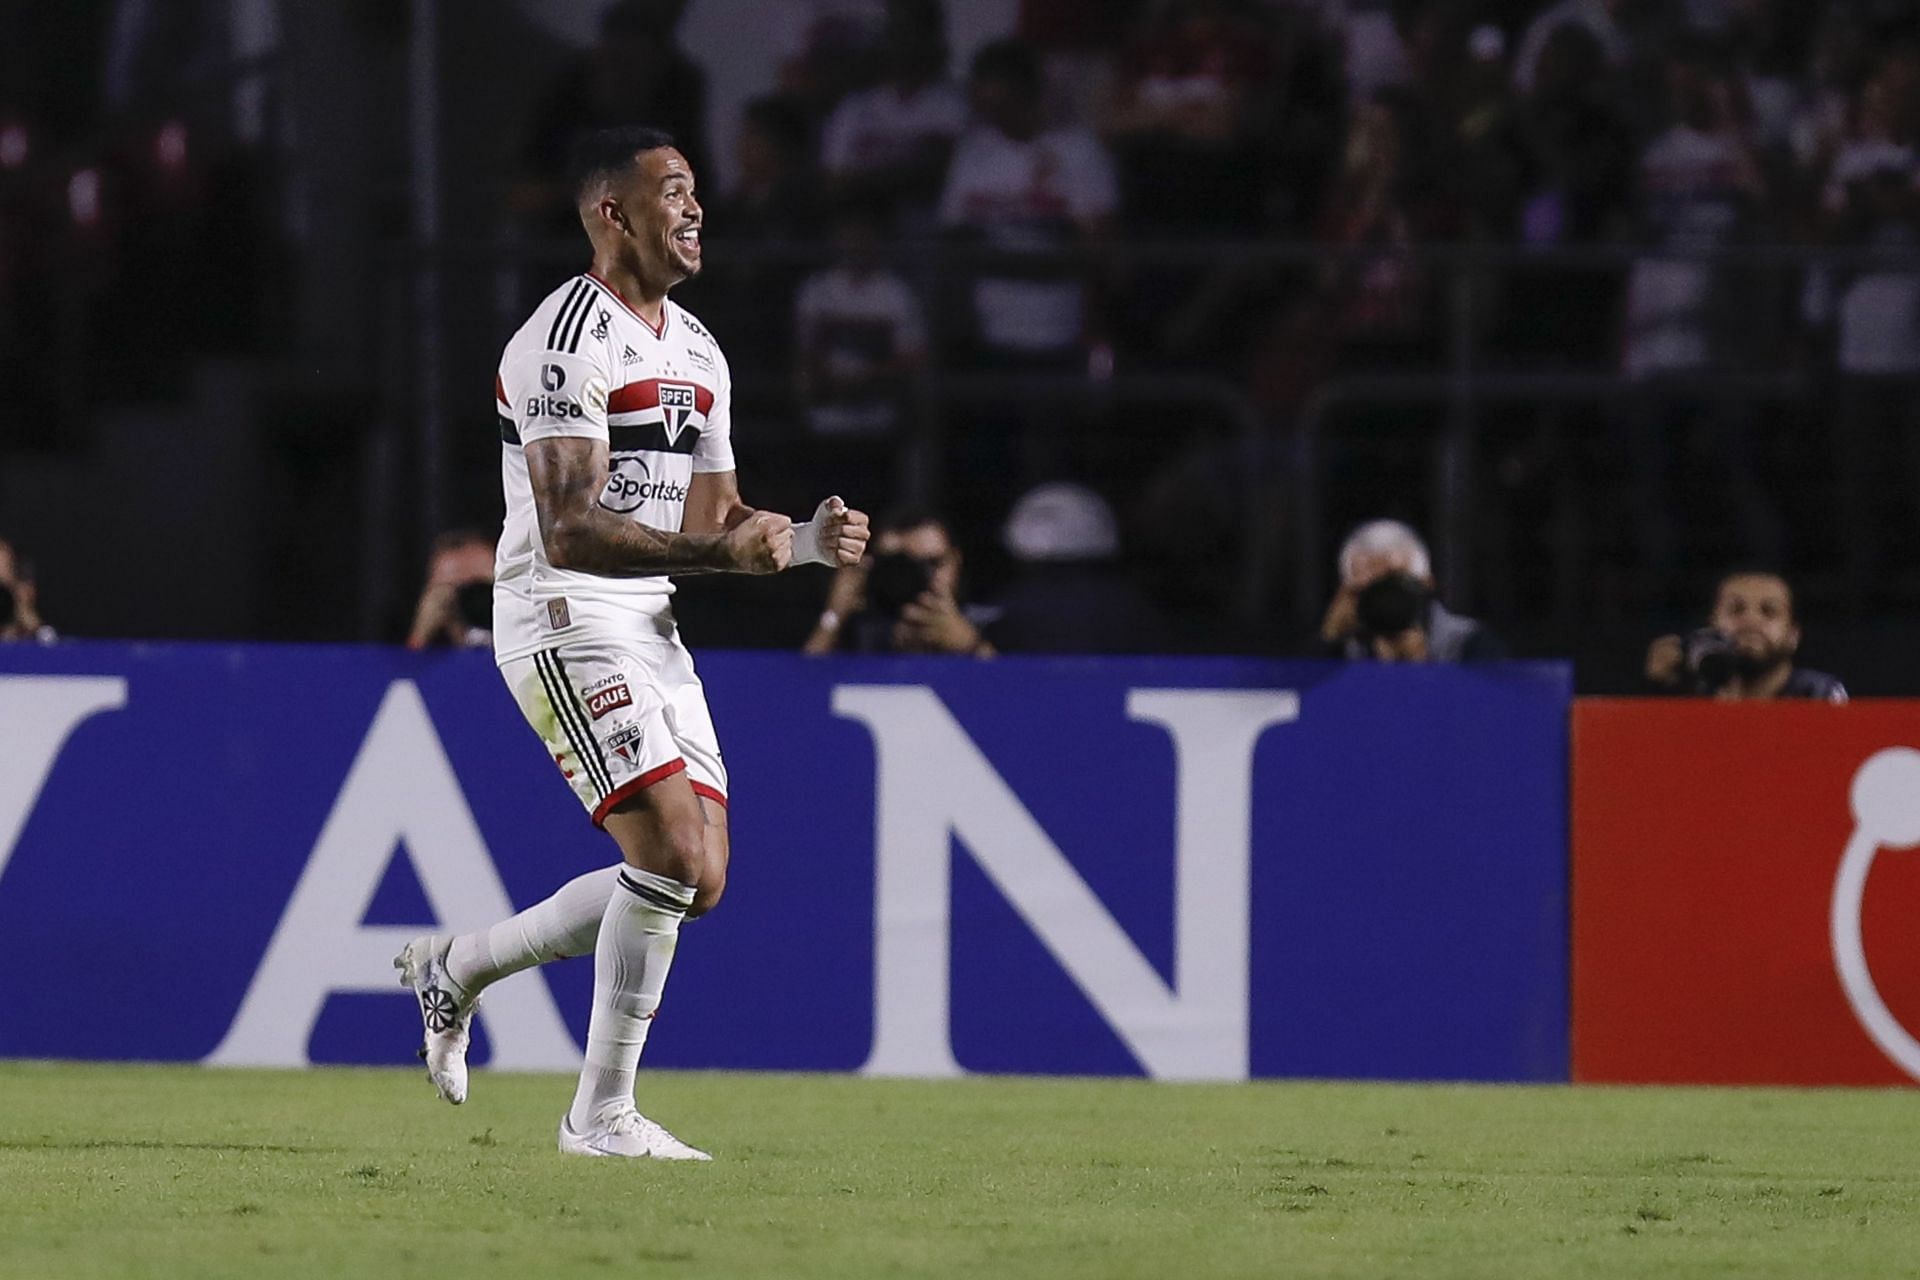 Botafogo play host to Sao Paulo on Thursday